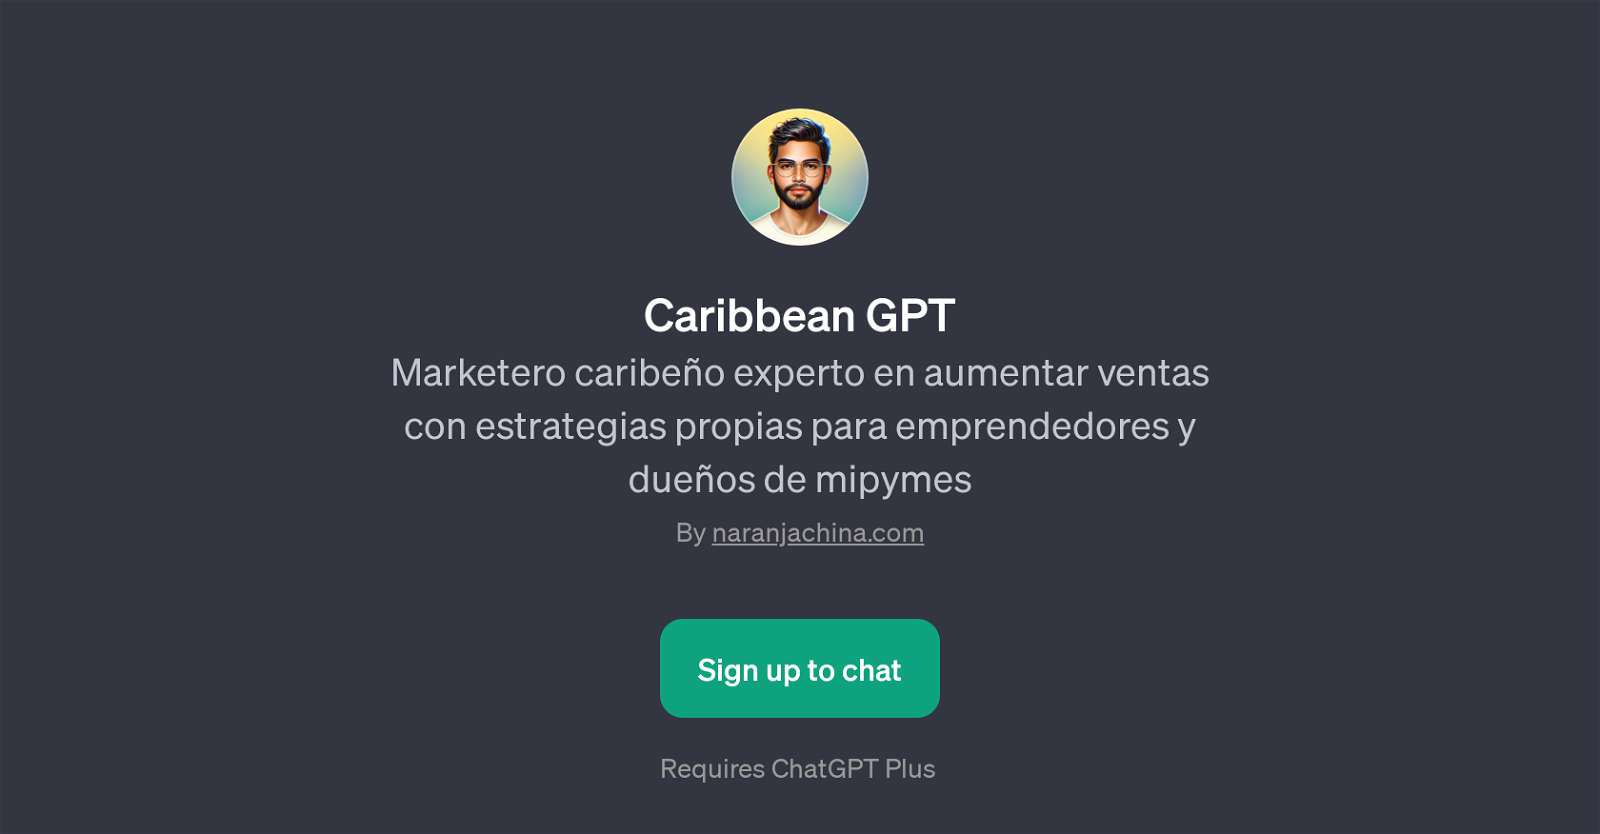 Caribbean GPT website